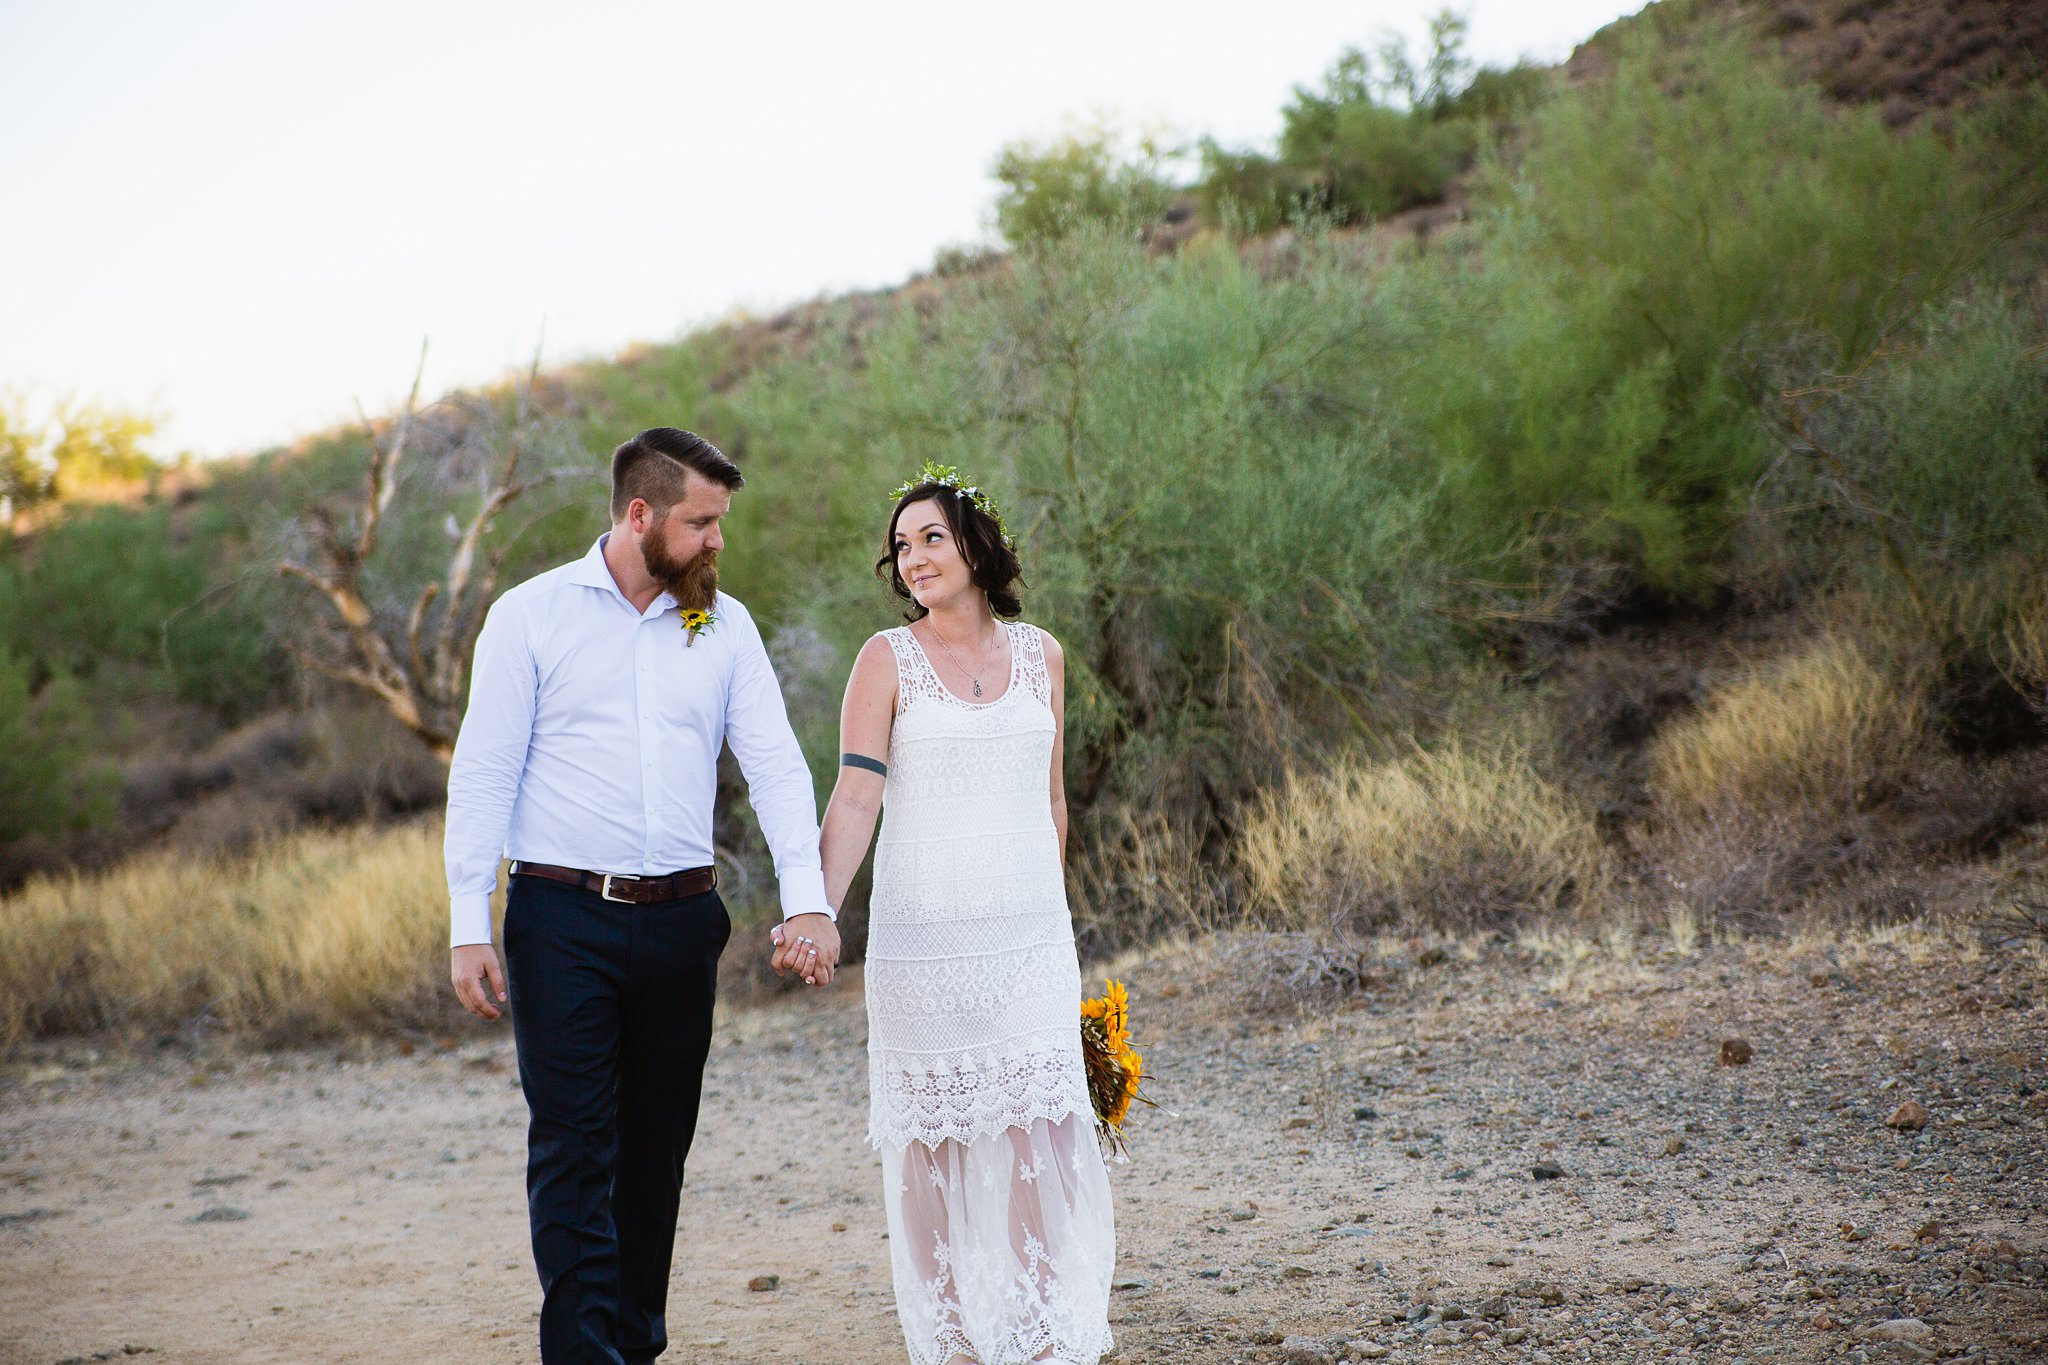 Simple boho inspired bride and groom walk together through the Arizona desert by Phoenix wedding photographer PMA Photography.